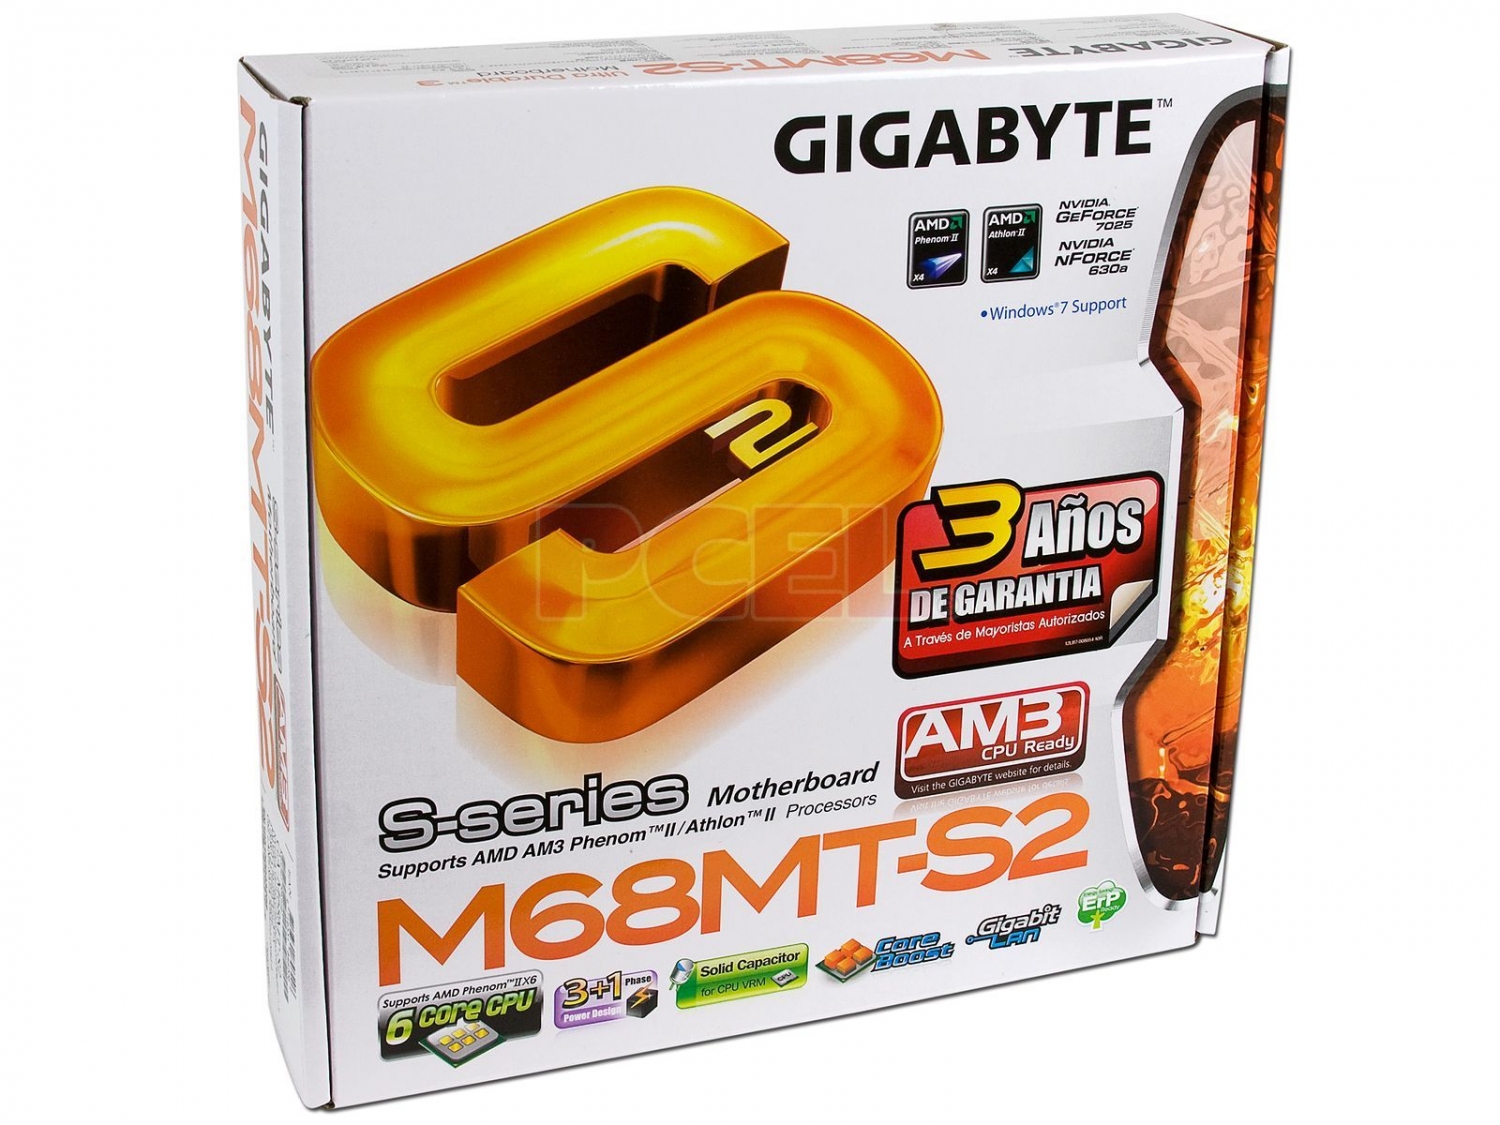 Hardware-Tarjetas-Madre-Gigabyte-GA-M68MT-S2-73631-4d4c39b0adf7d